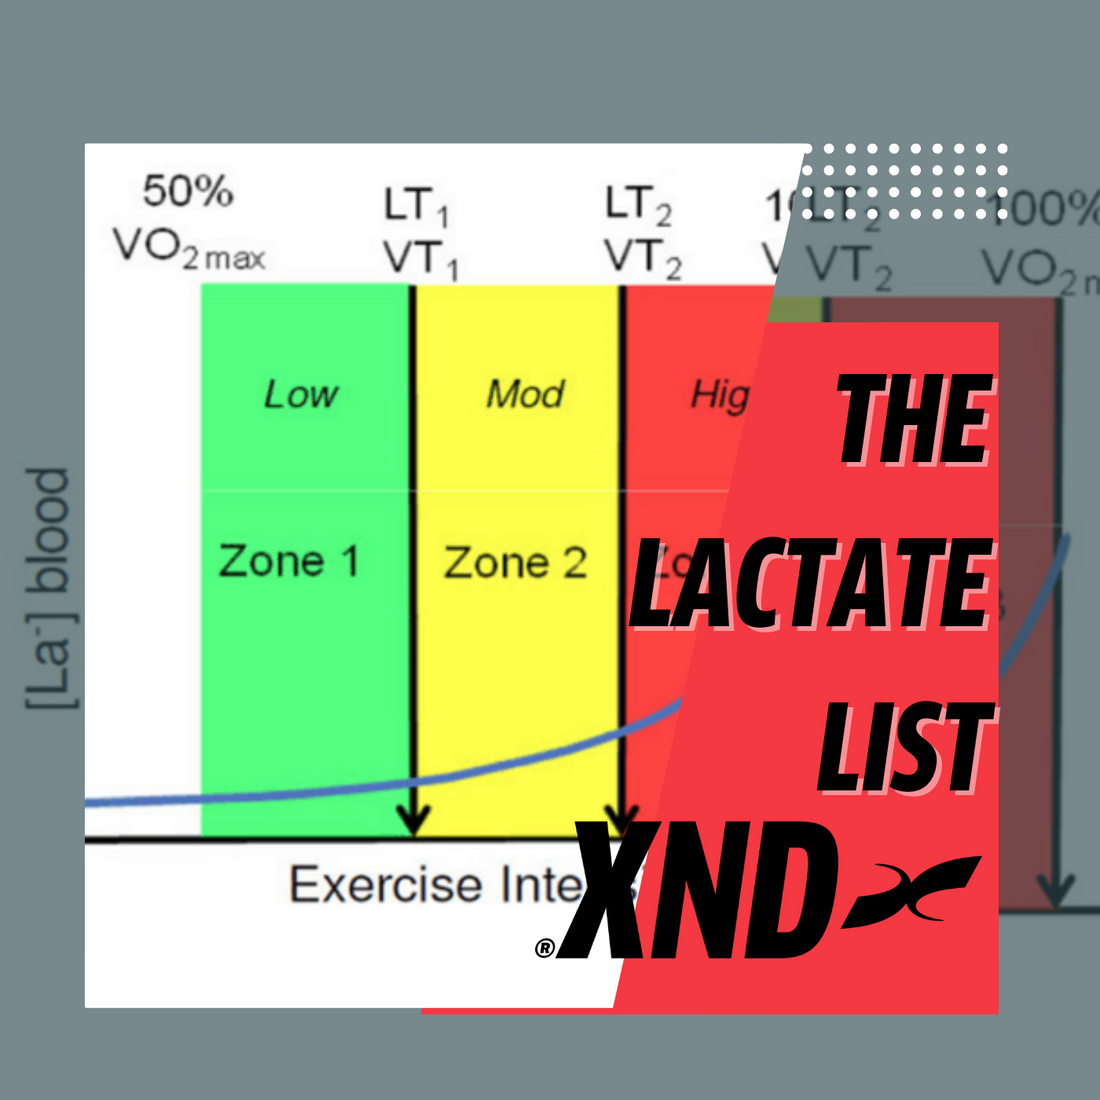 The Lactate list